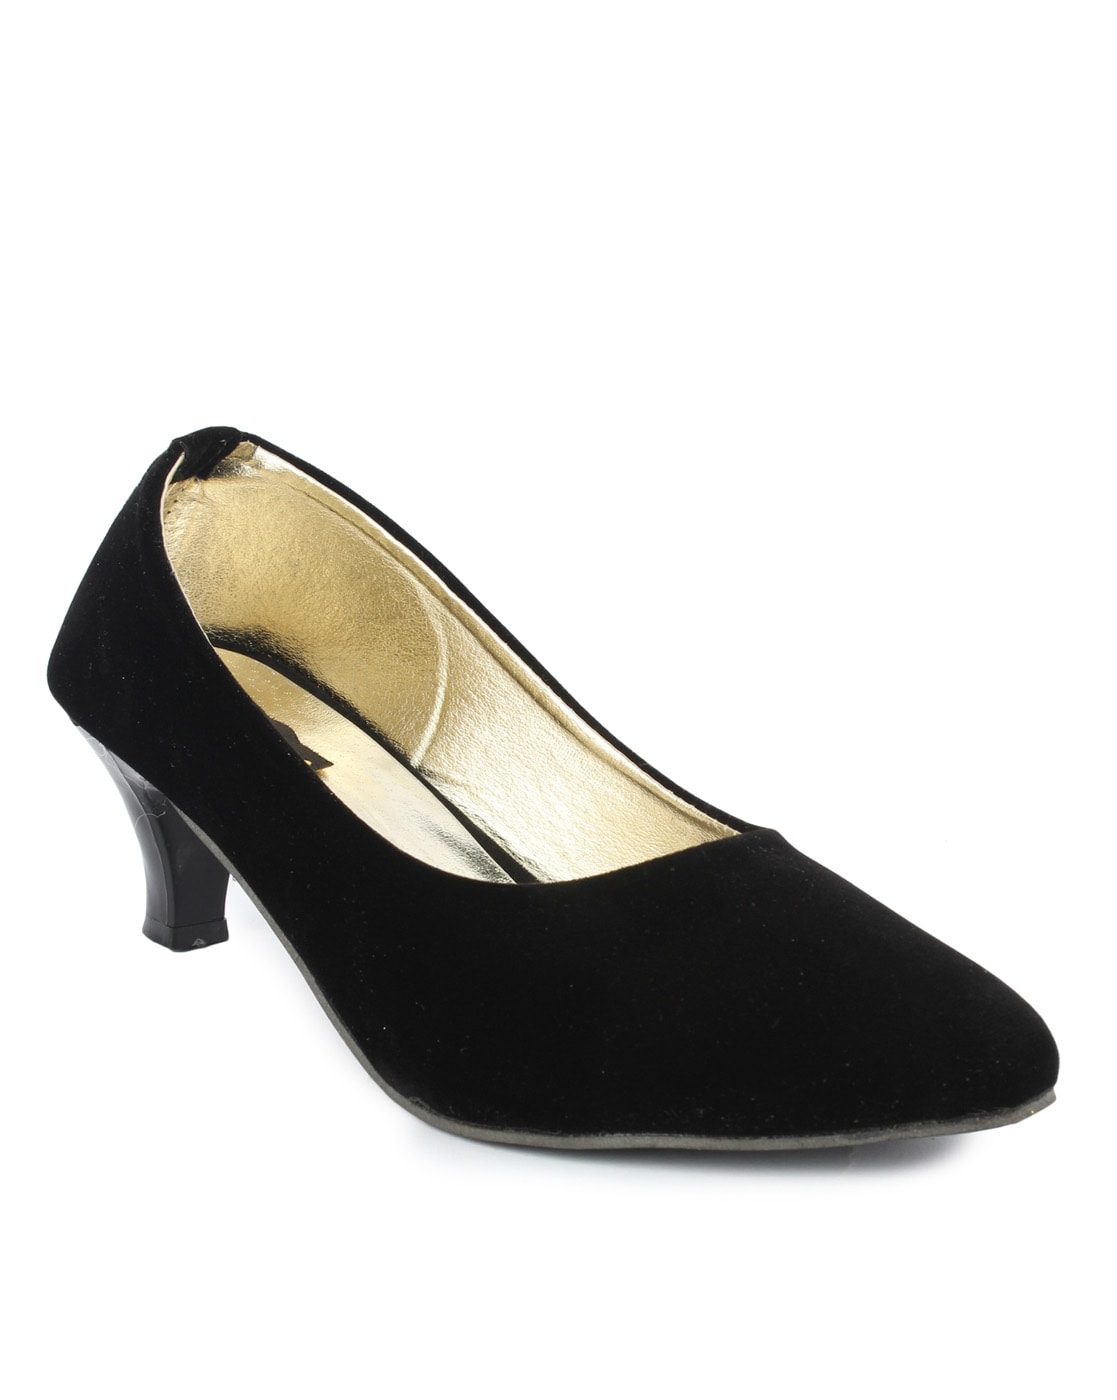 Get Shimmer Metallic Black Heels at ₹ 999 | LBB Shop